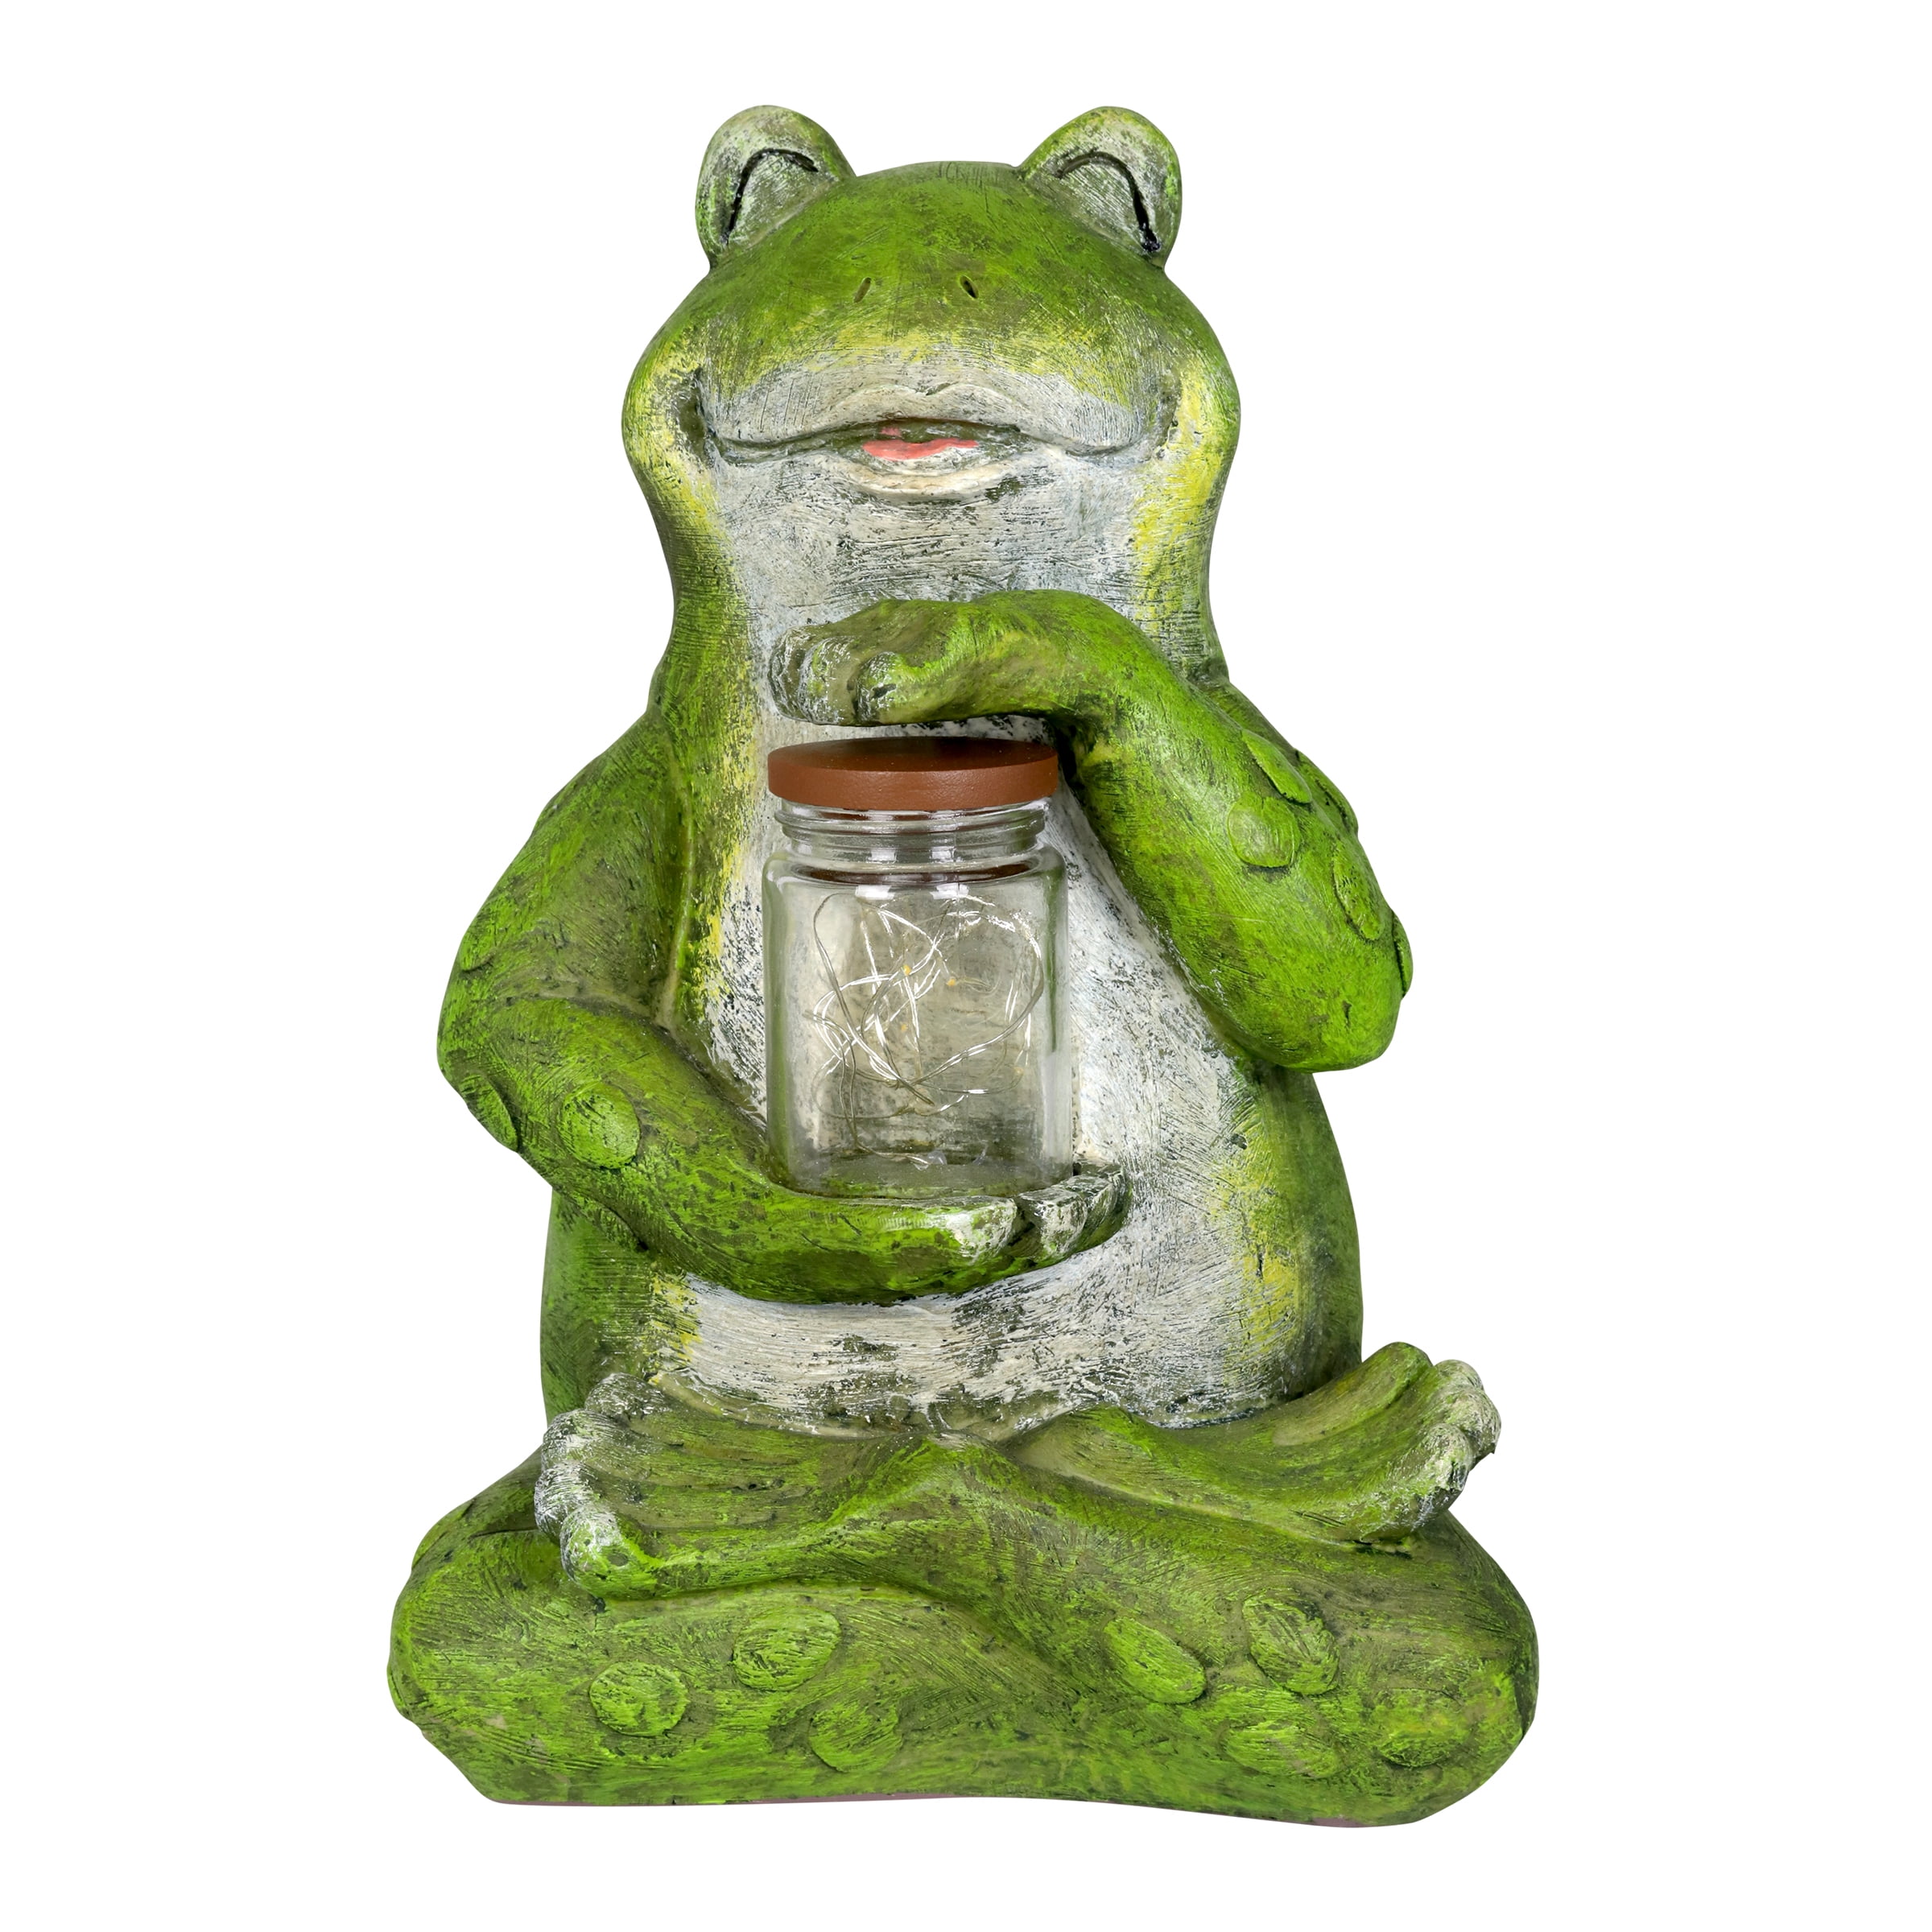 Design Toscano Tower of Frog Power Garden Statue Outdoor Statues for sale online 